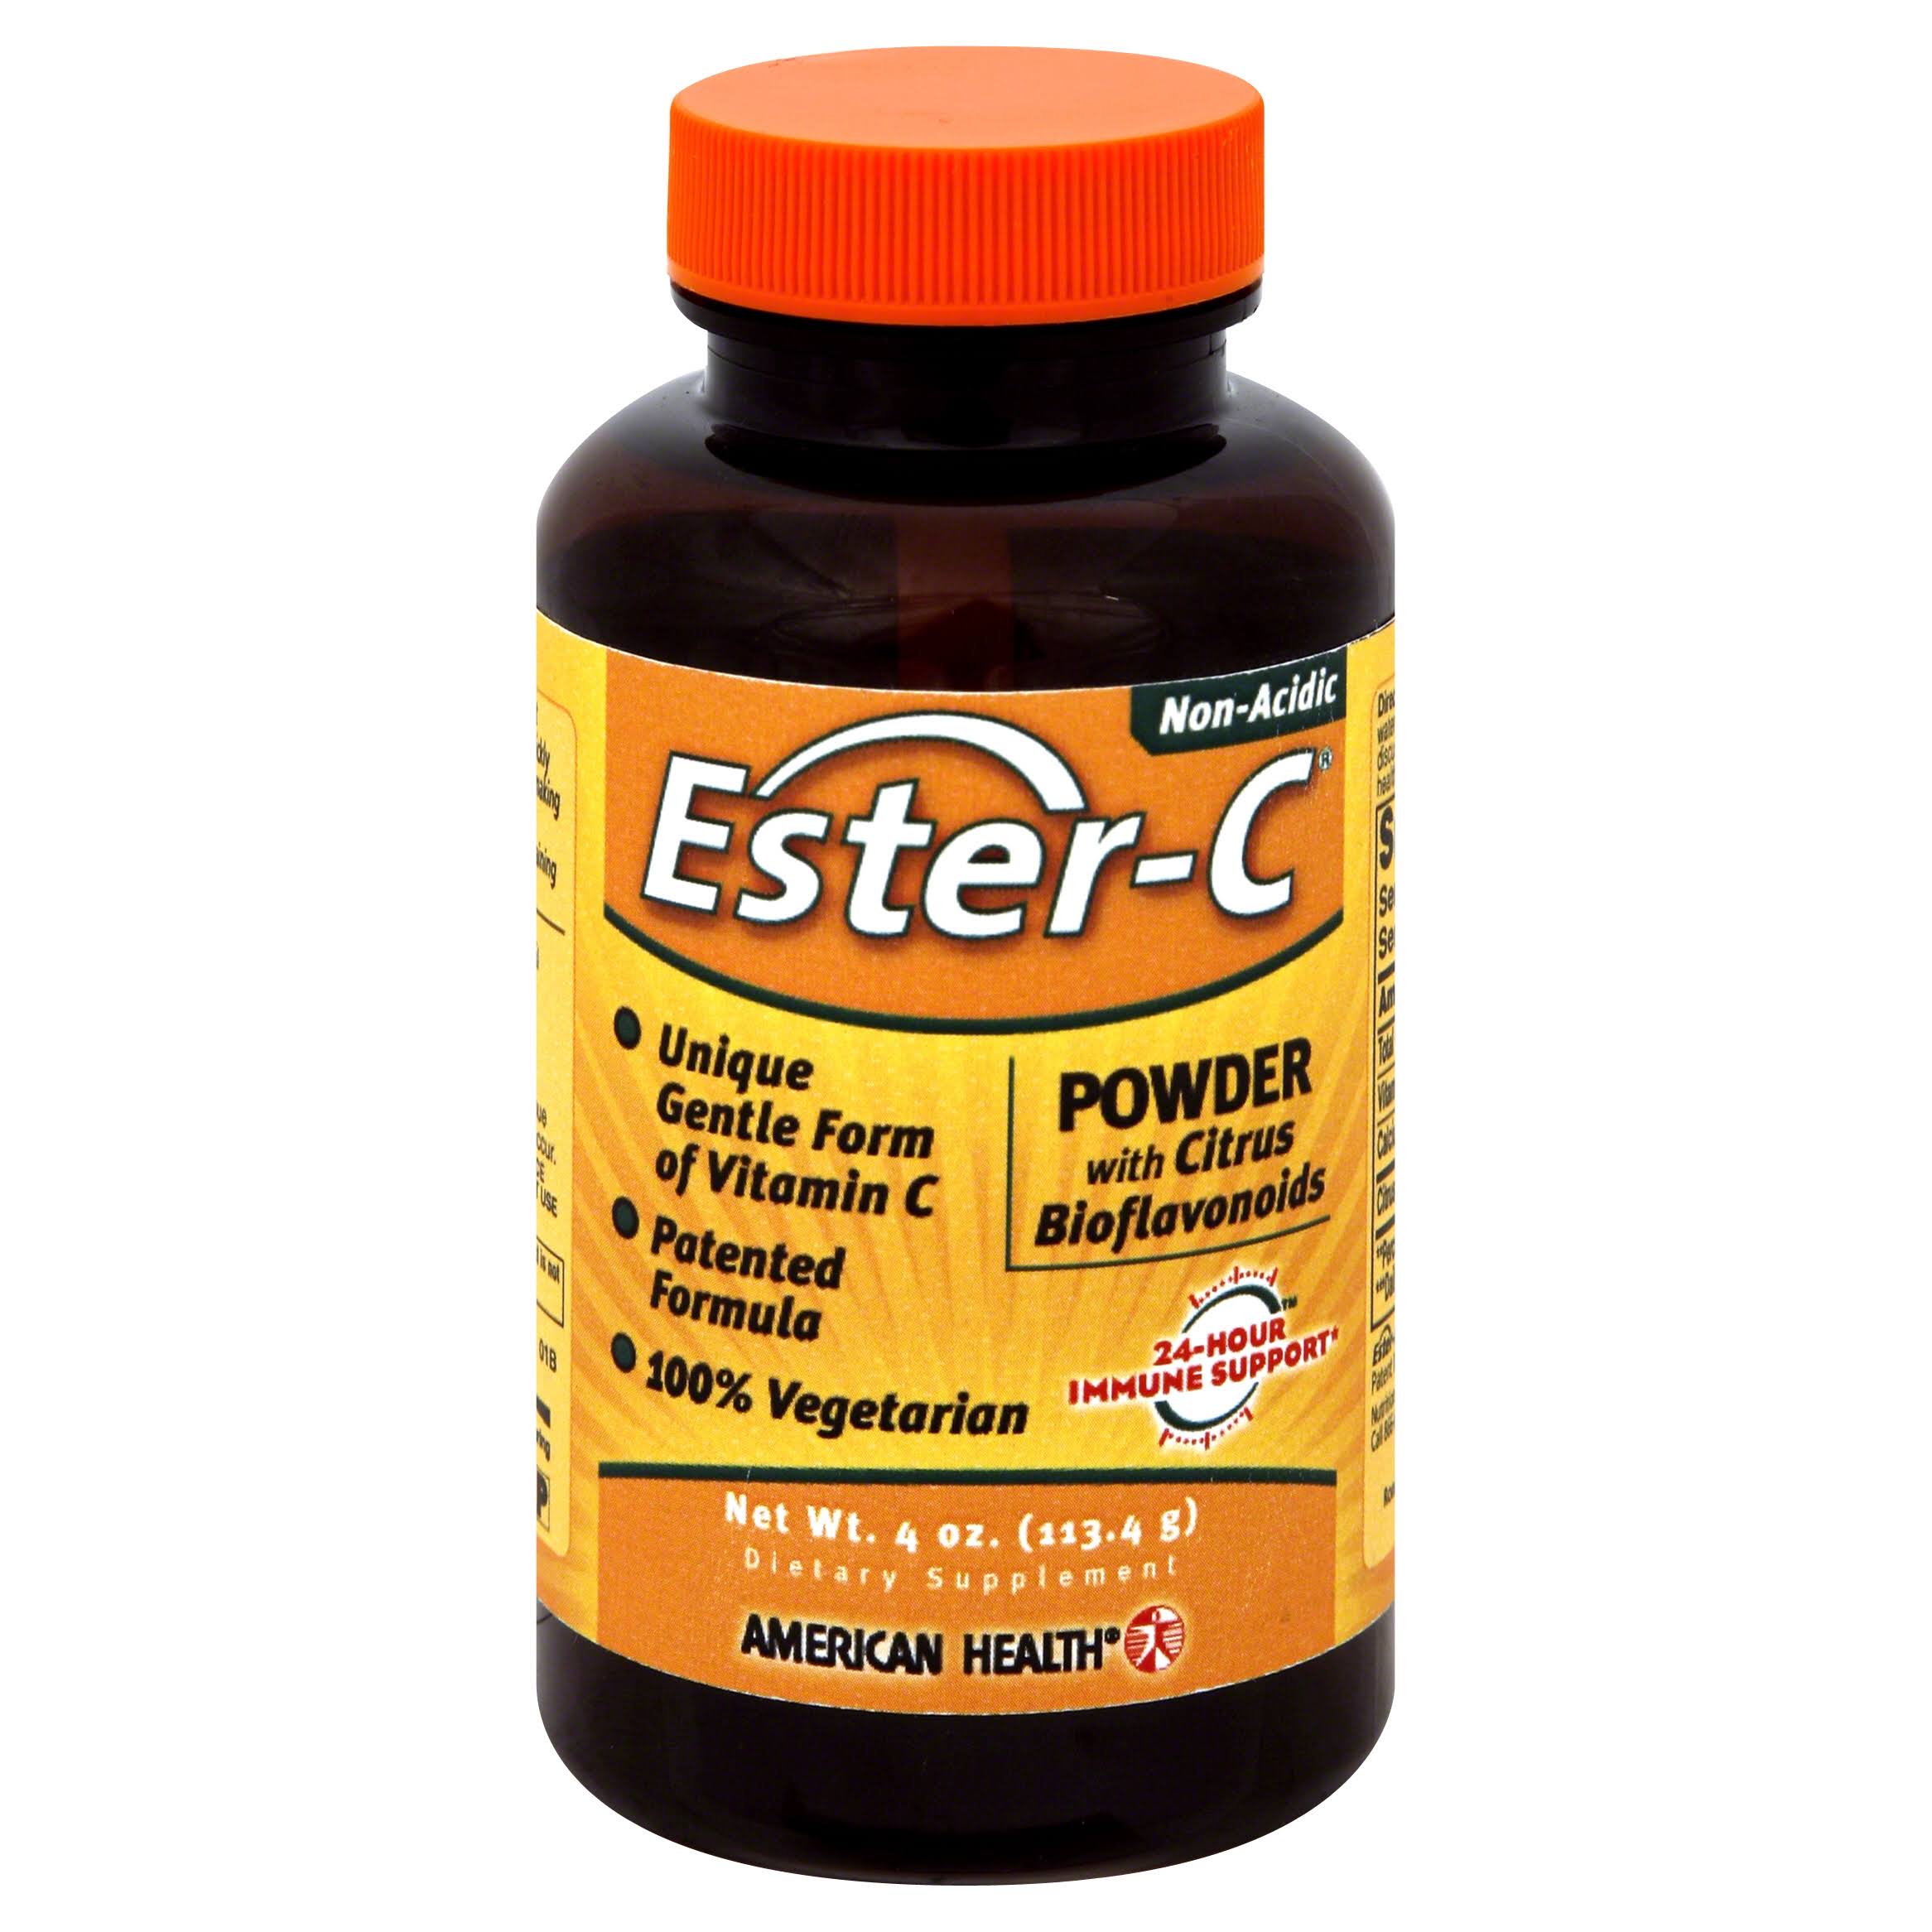 American Health Ester-C, Powder with Citrus Bioflavonoids - 4 oz